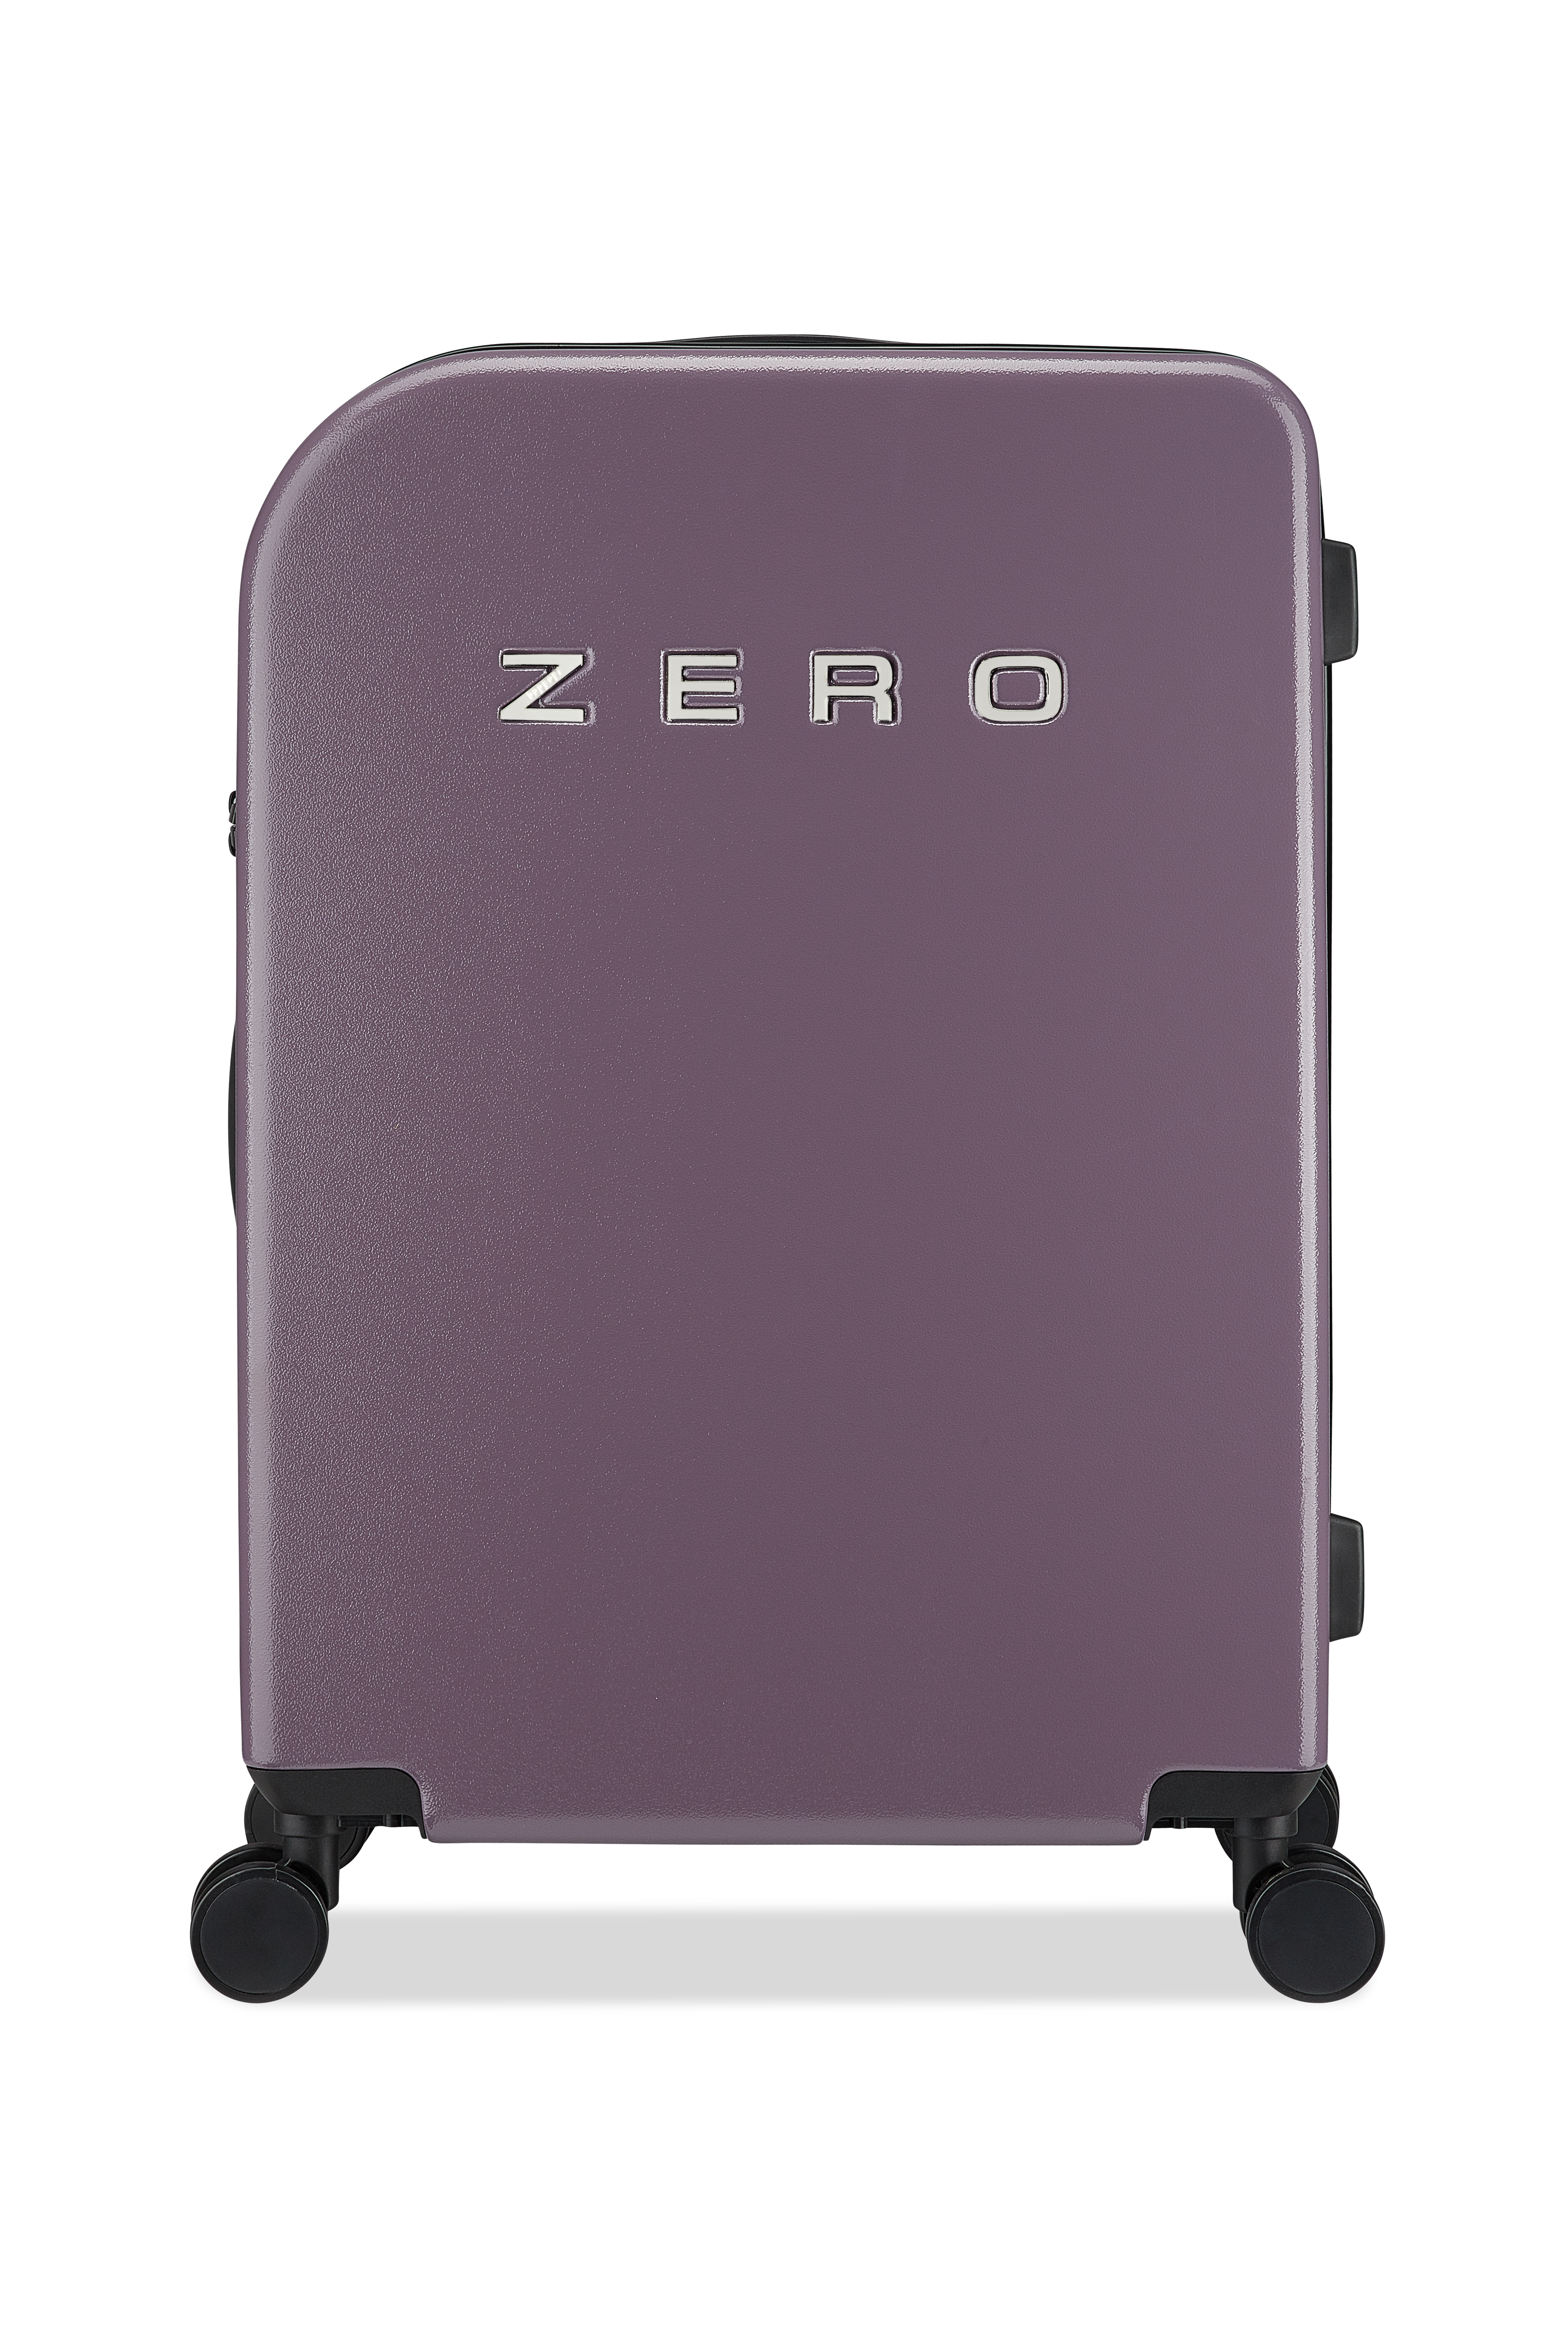 Zero Luggage Purple